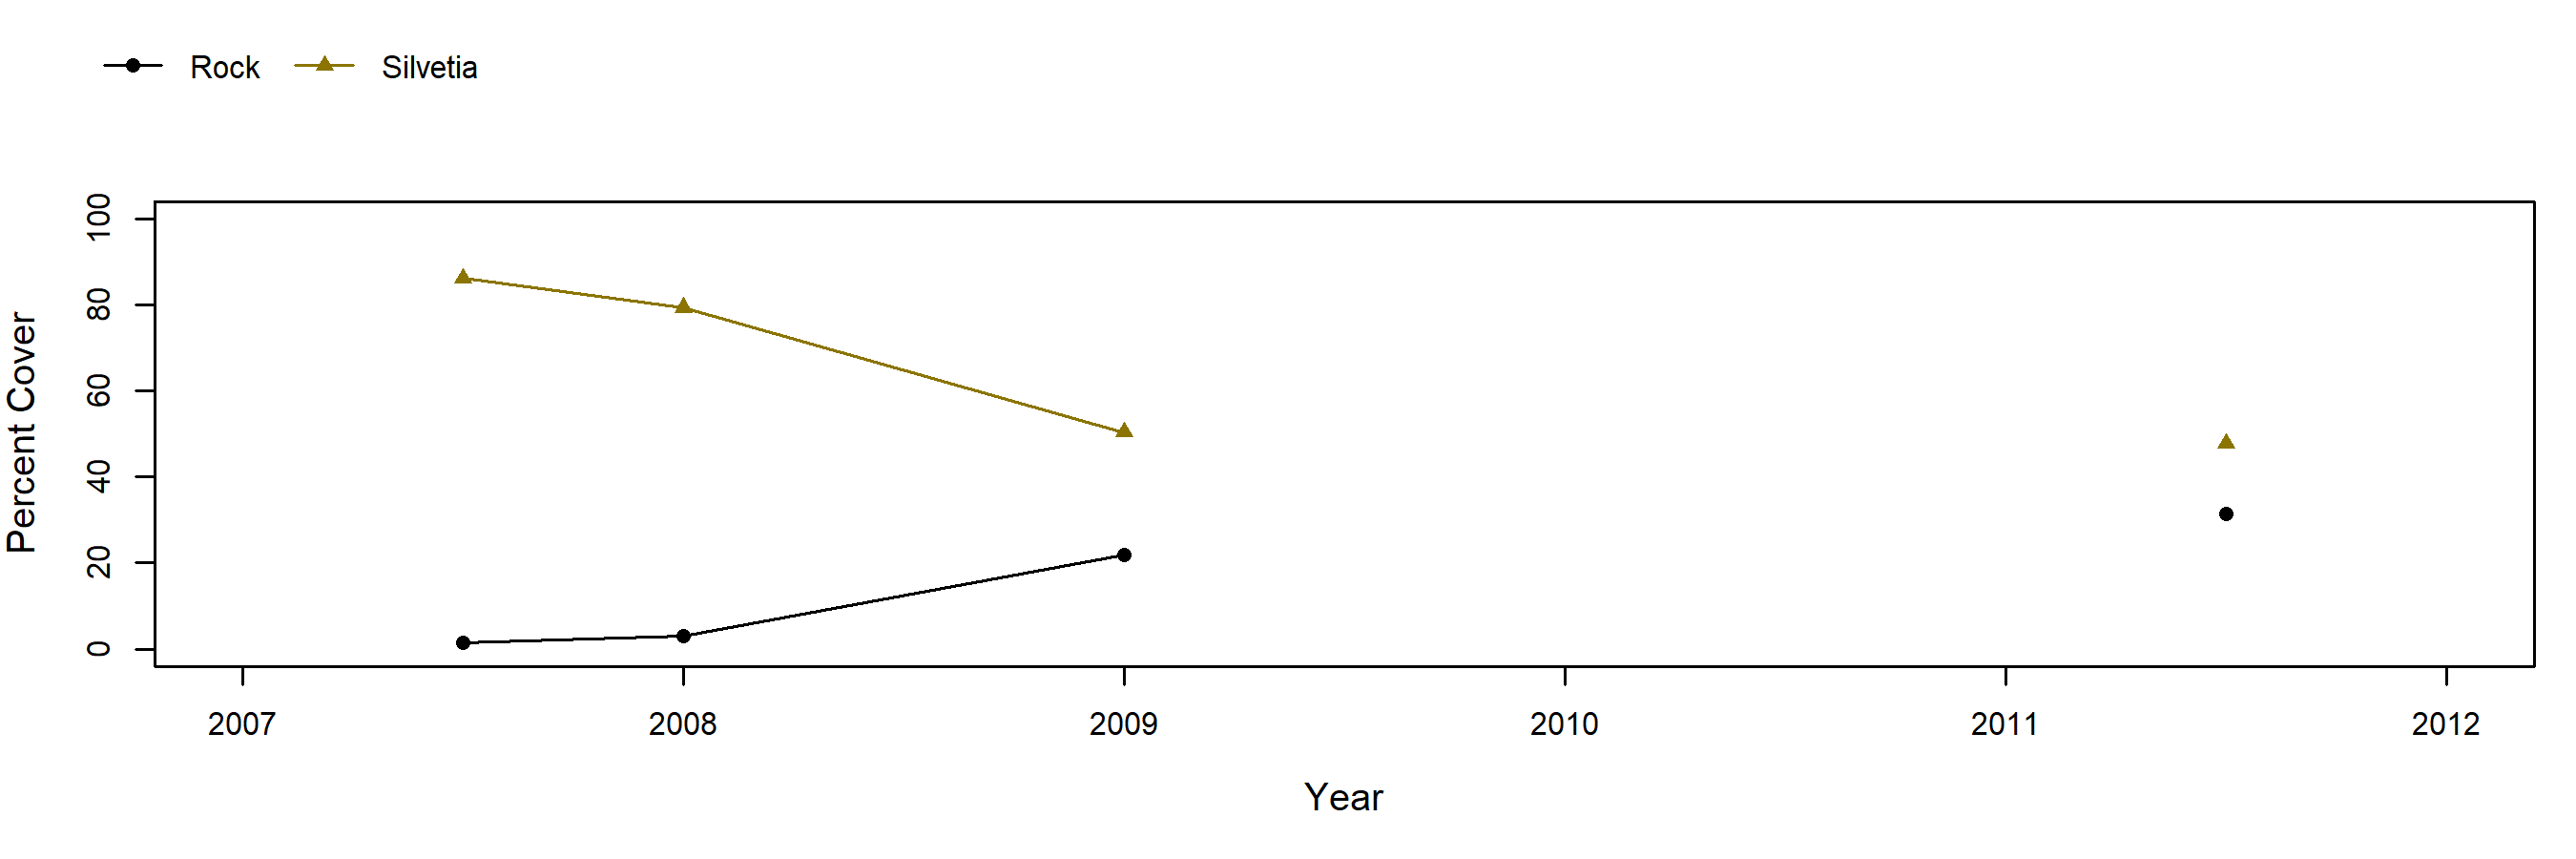 Diablo Silvetia trend plot